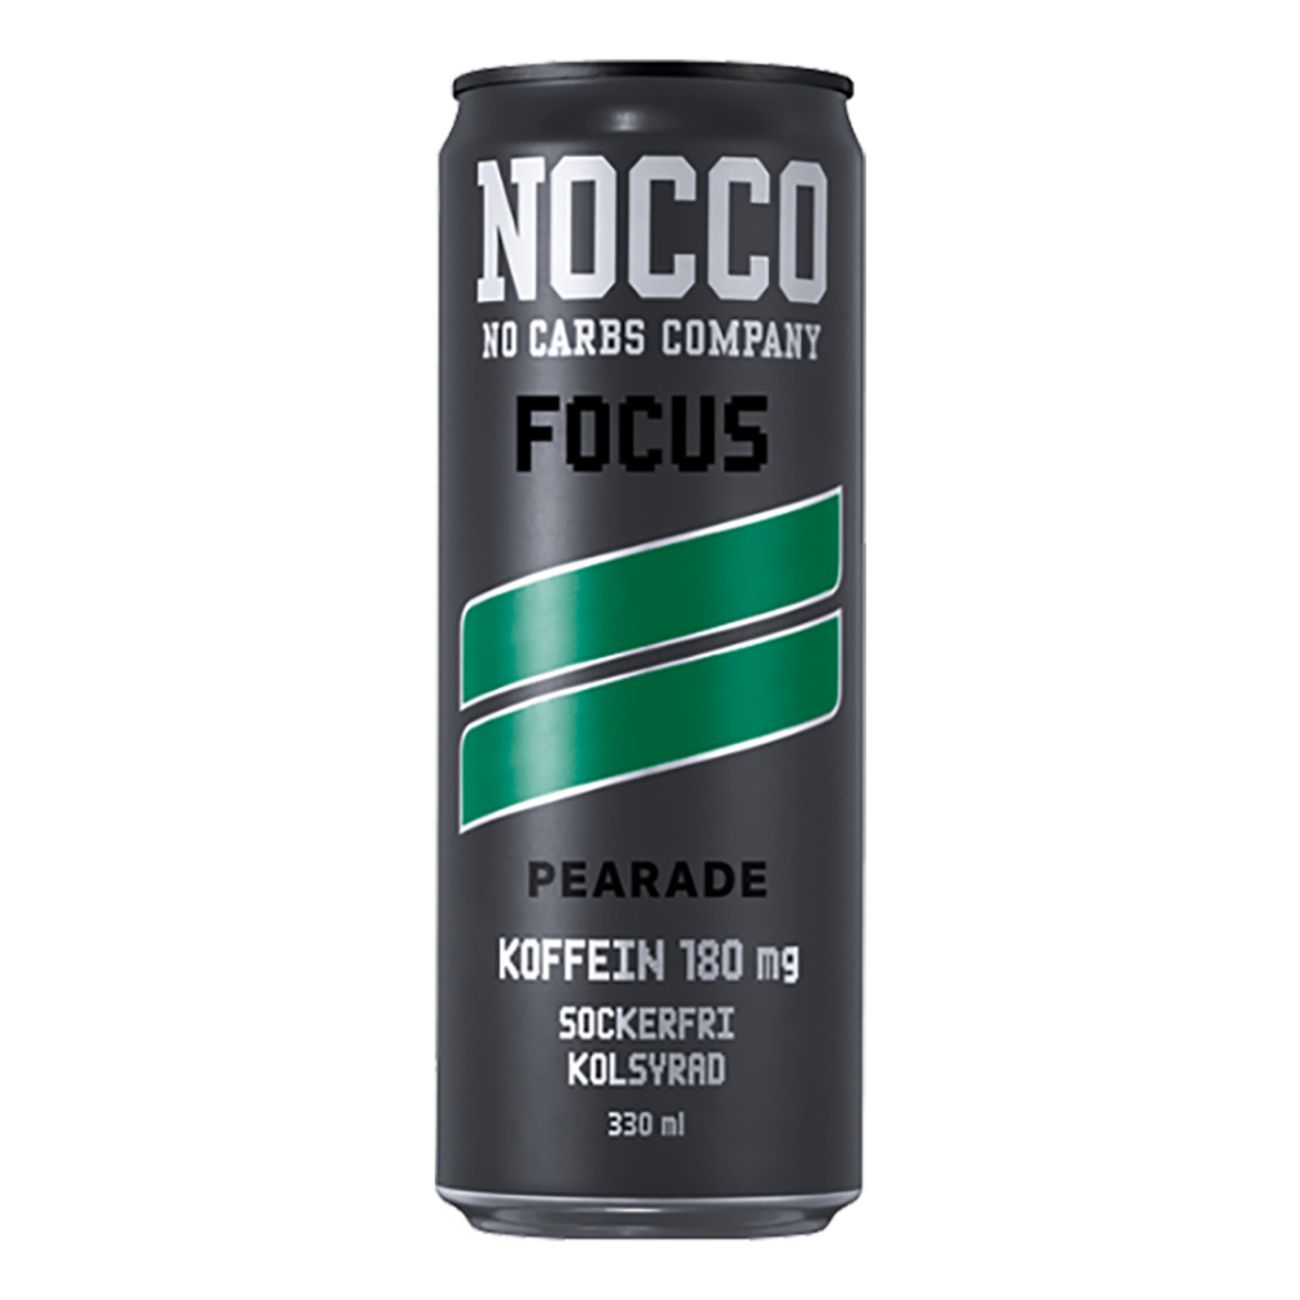 nocco-focus-pearade-92353-2